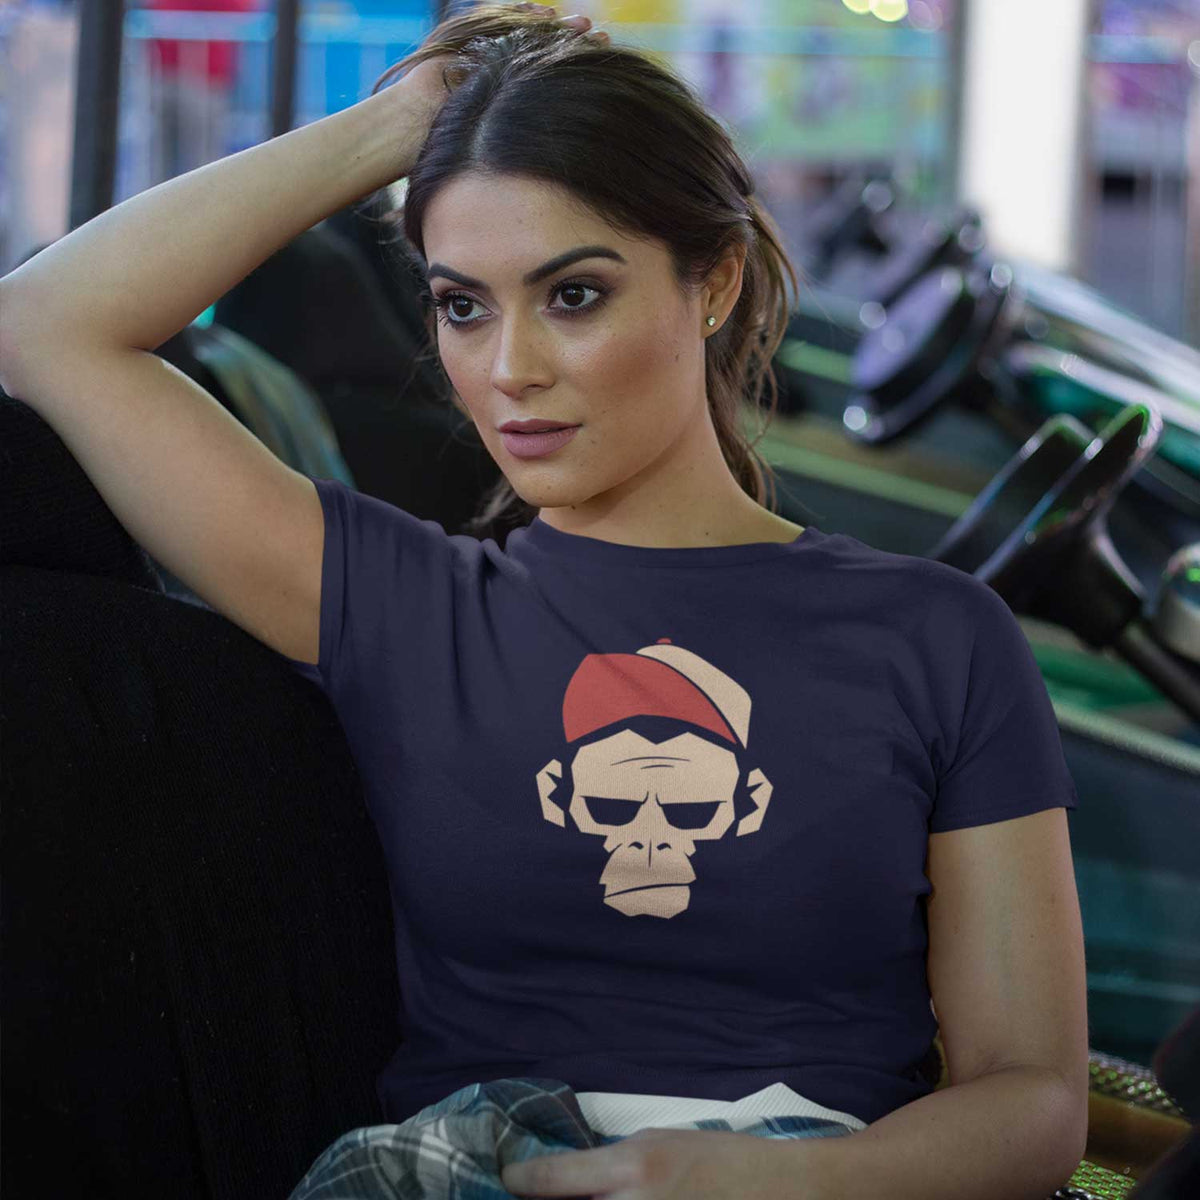 Monkey Head Printed Crop Top T-shirt